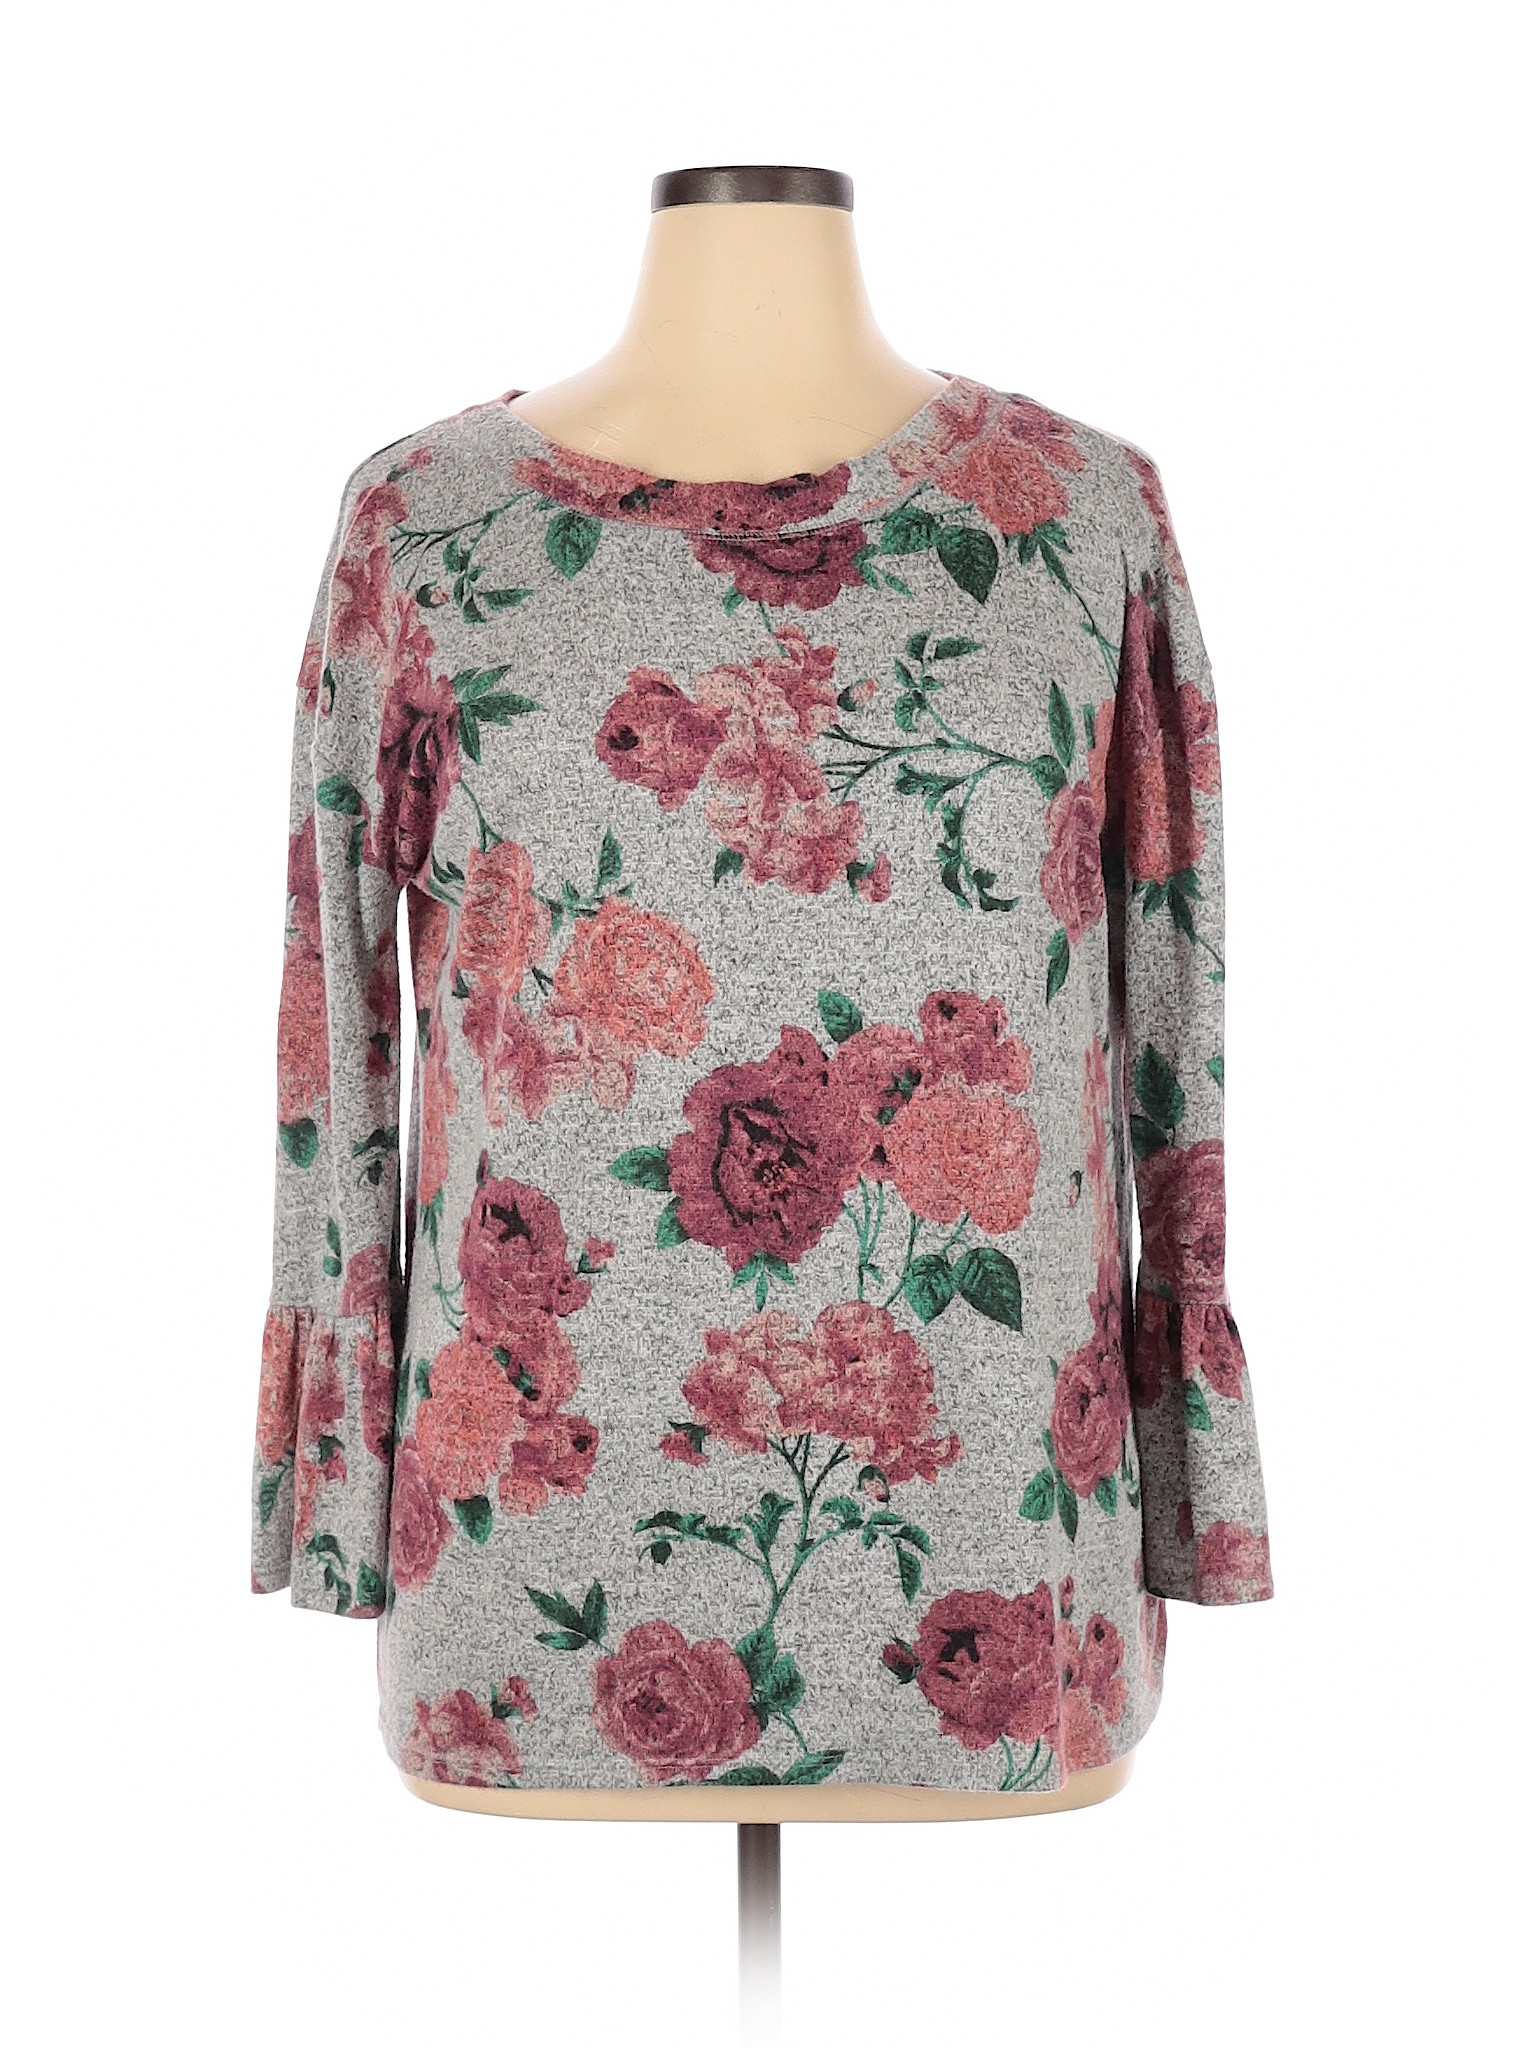 Maurices Floral Gray Sweatshirt Size XL - 67% off | thredUP